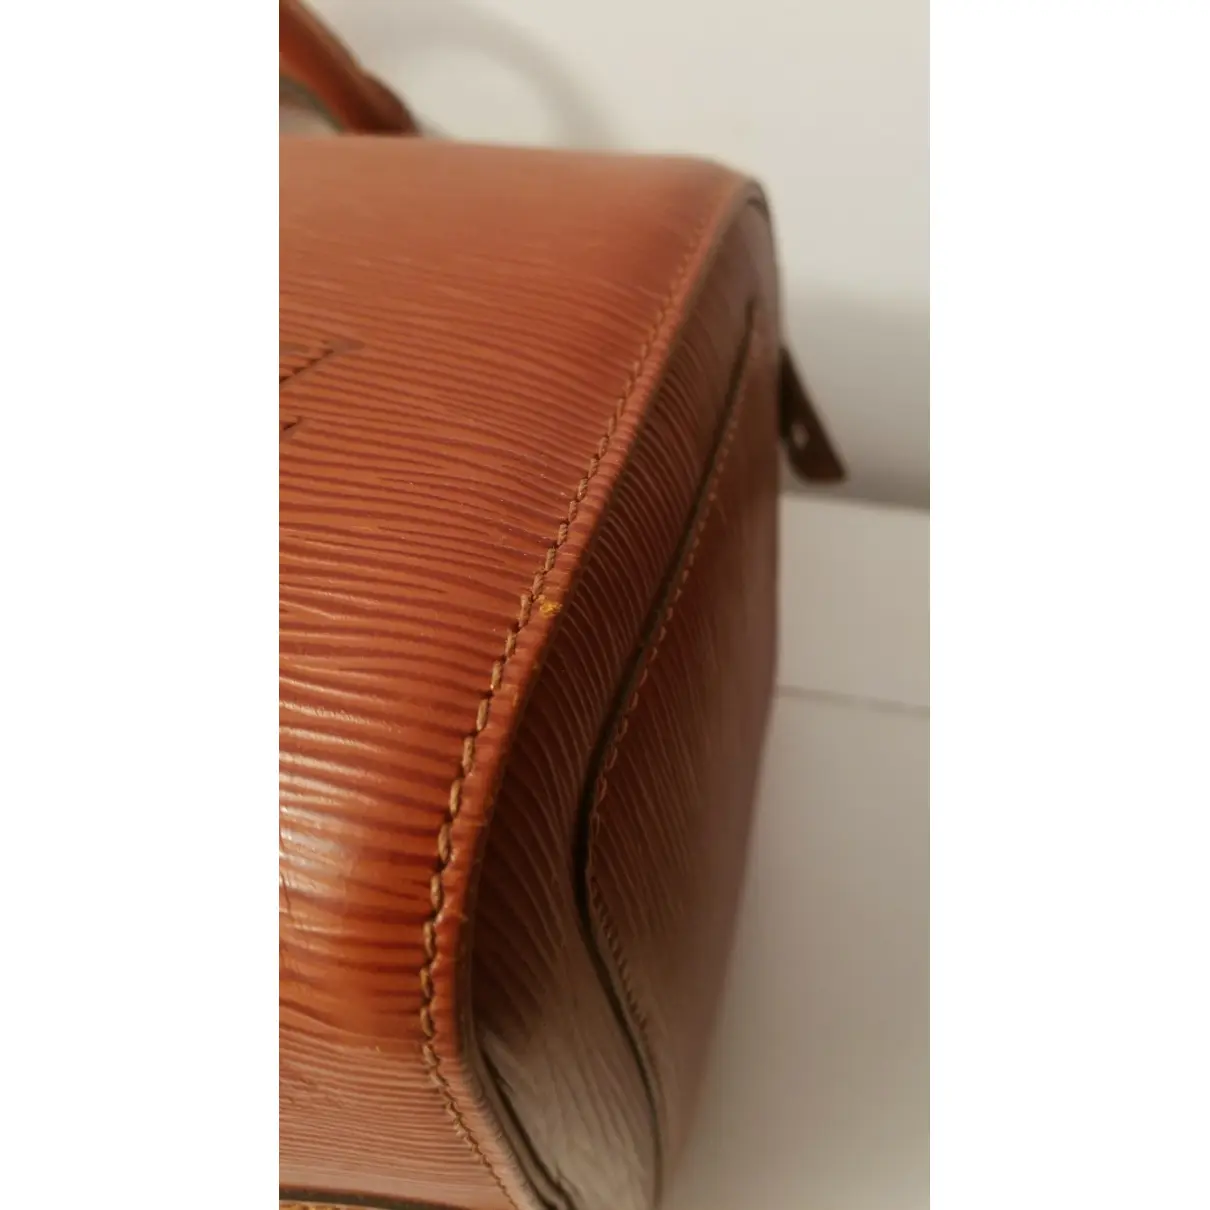 Speedy leather handbag Louis Vuitton